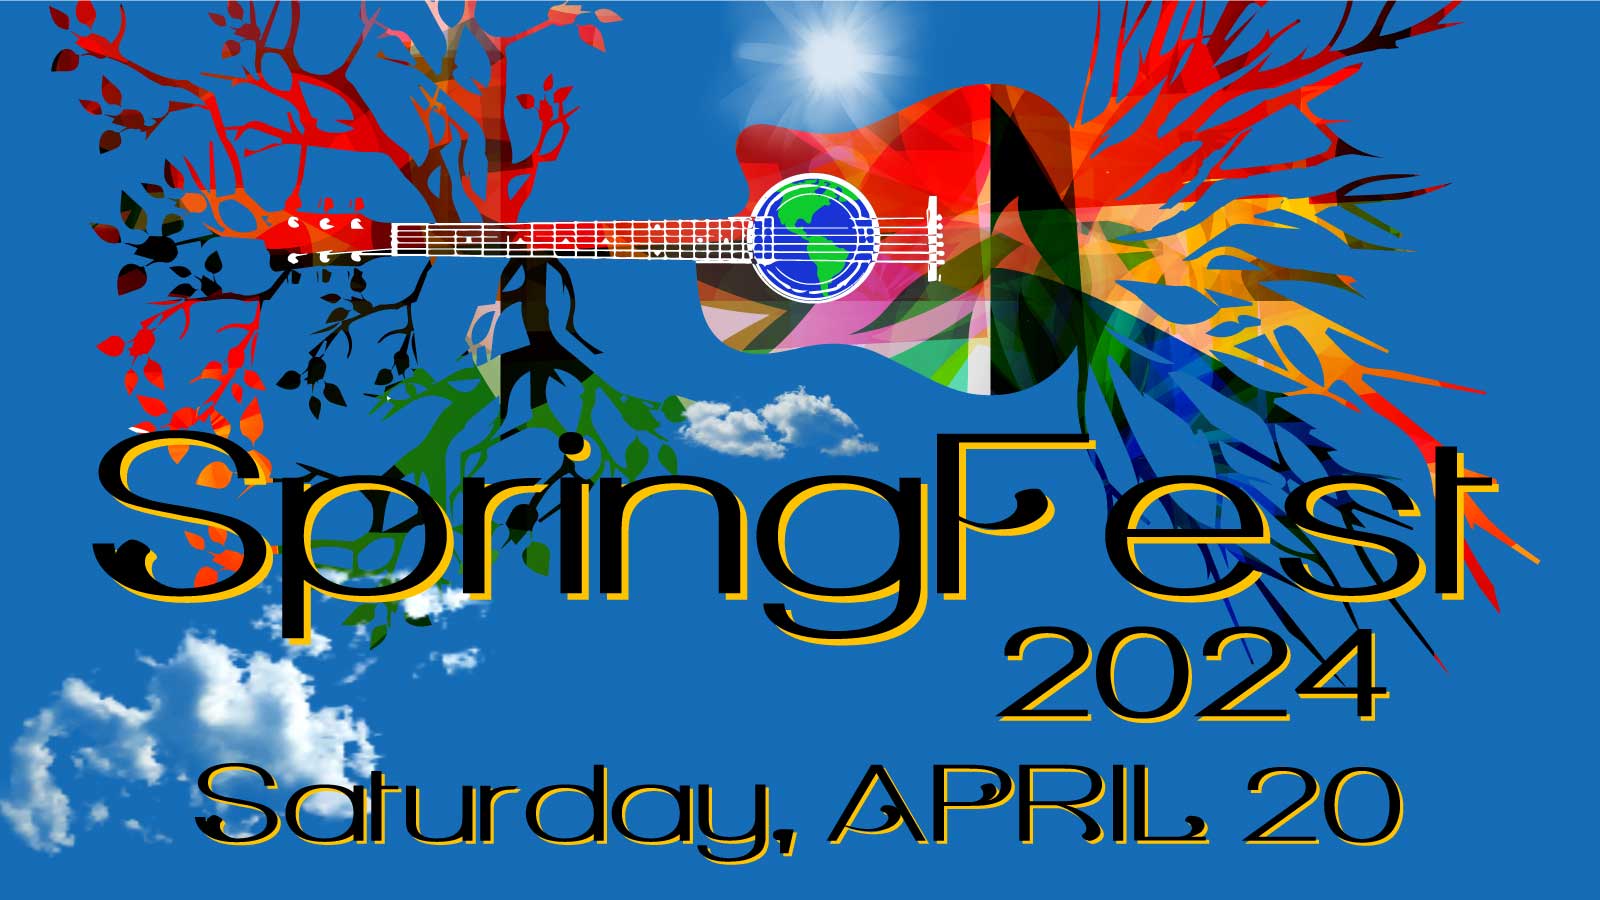 Springfest 2024 In Old Ellicott City Live Music April 20, 2024